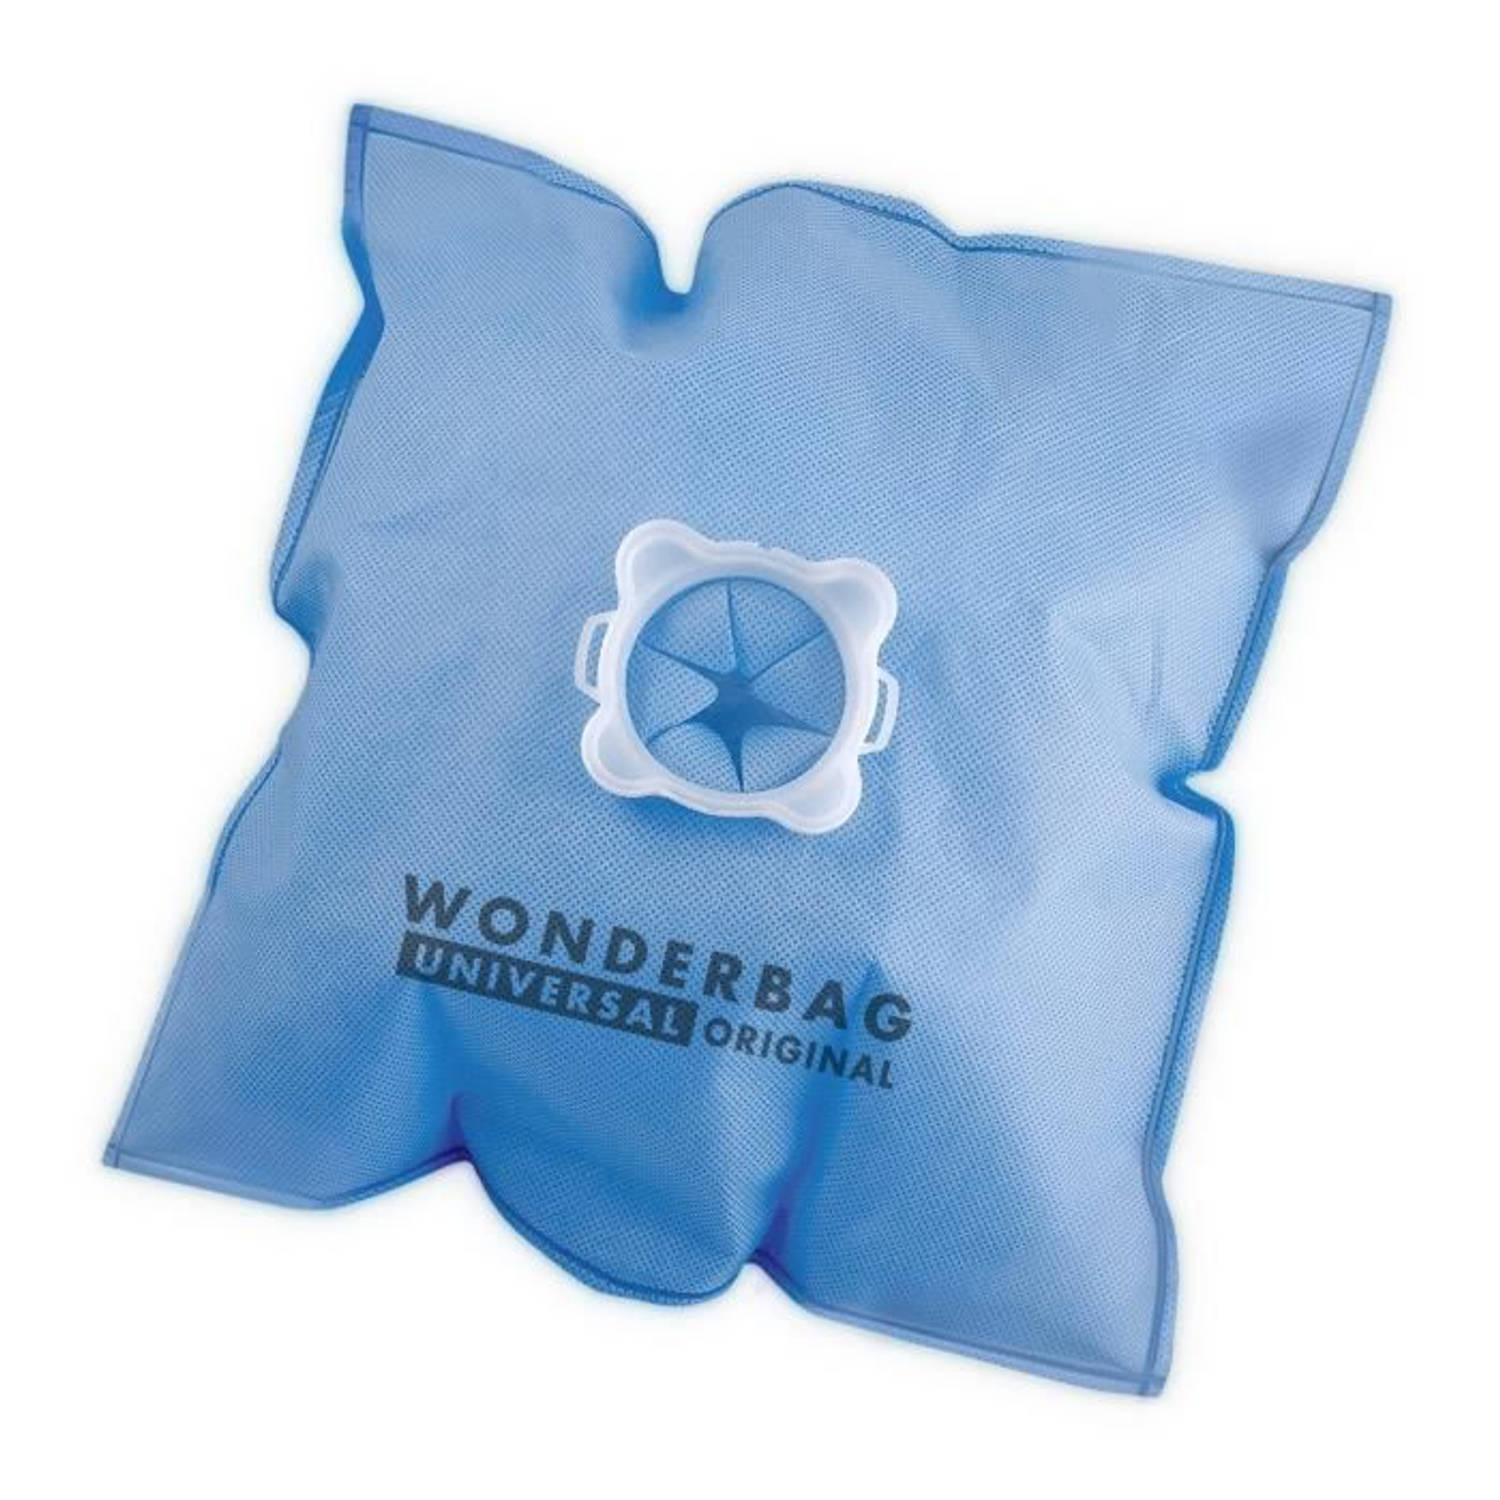 Wonderbag classic x5